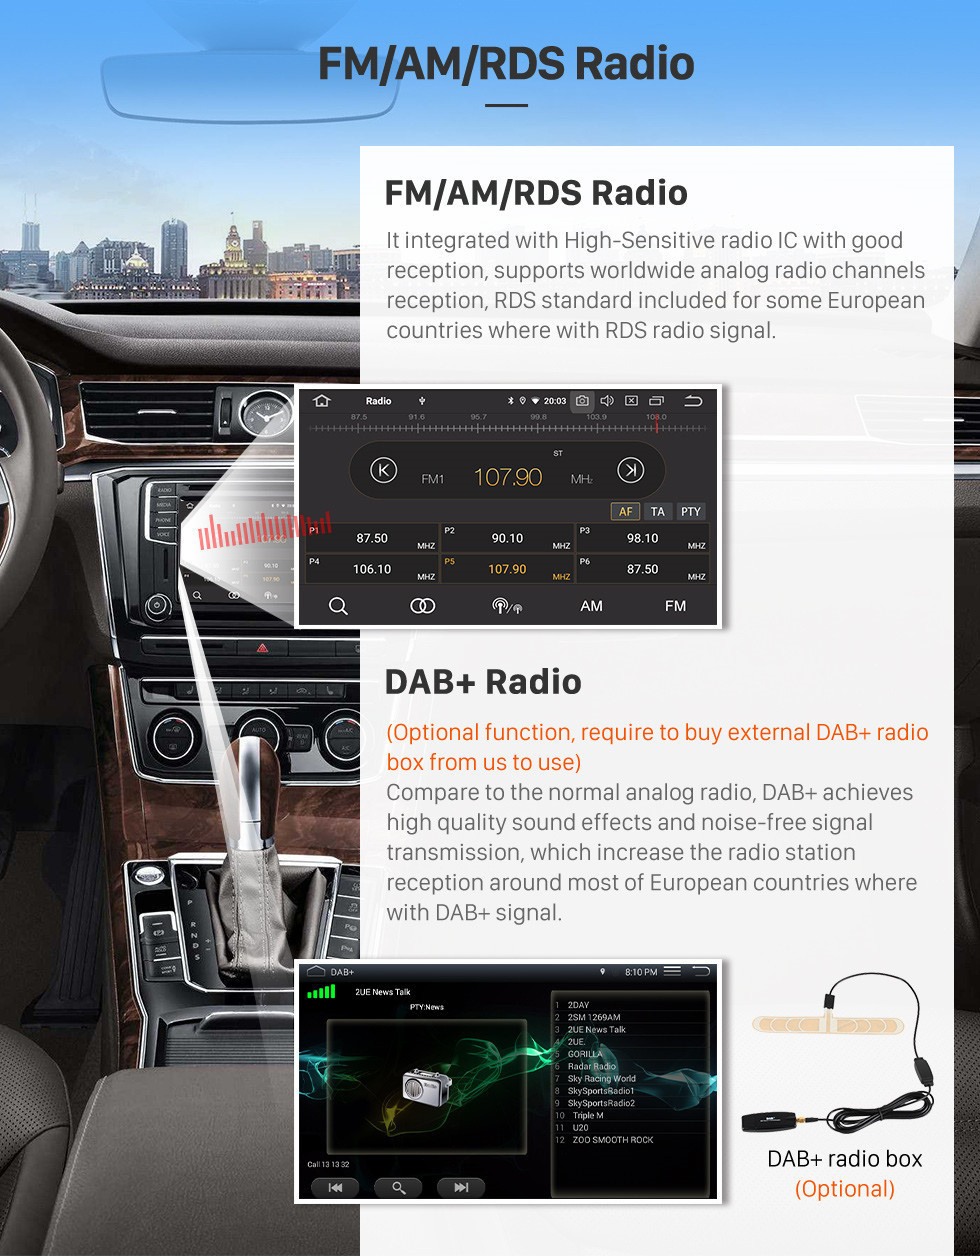 Seicane Pantalla táctil HD 2014-2016 Mazda Atenza Android 11.0 9 pulgadas GPS Navegación Radio Bluetooth USB WIFI Carplay soporte DAB + TPMS OBD2